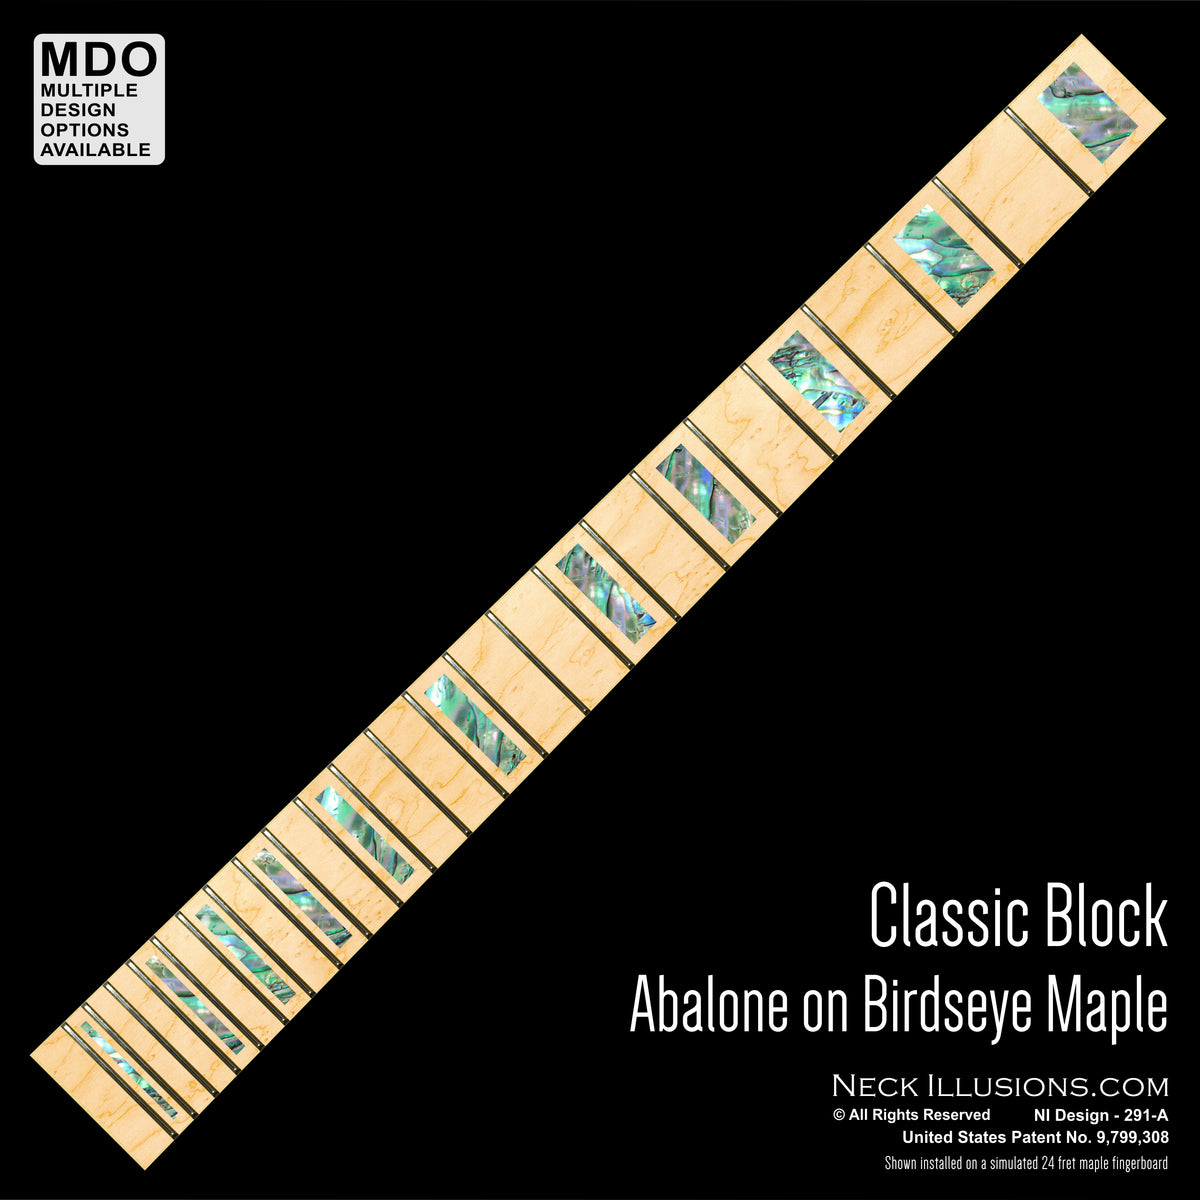 Classic Block on Birdseye Maple